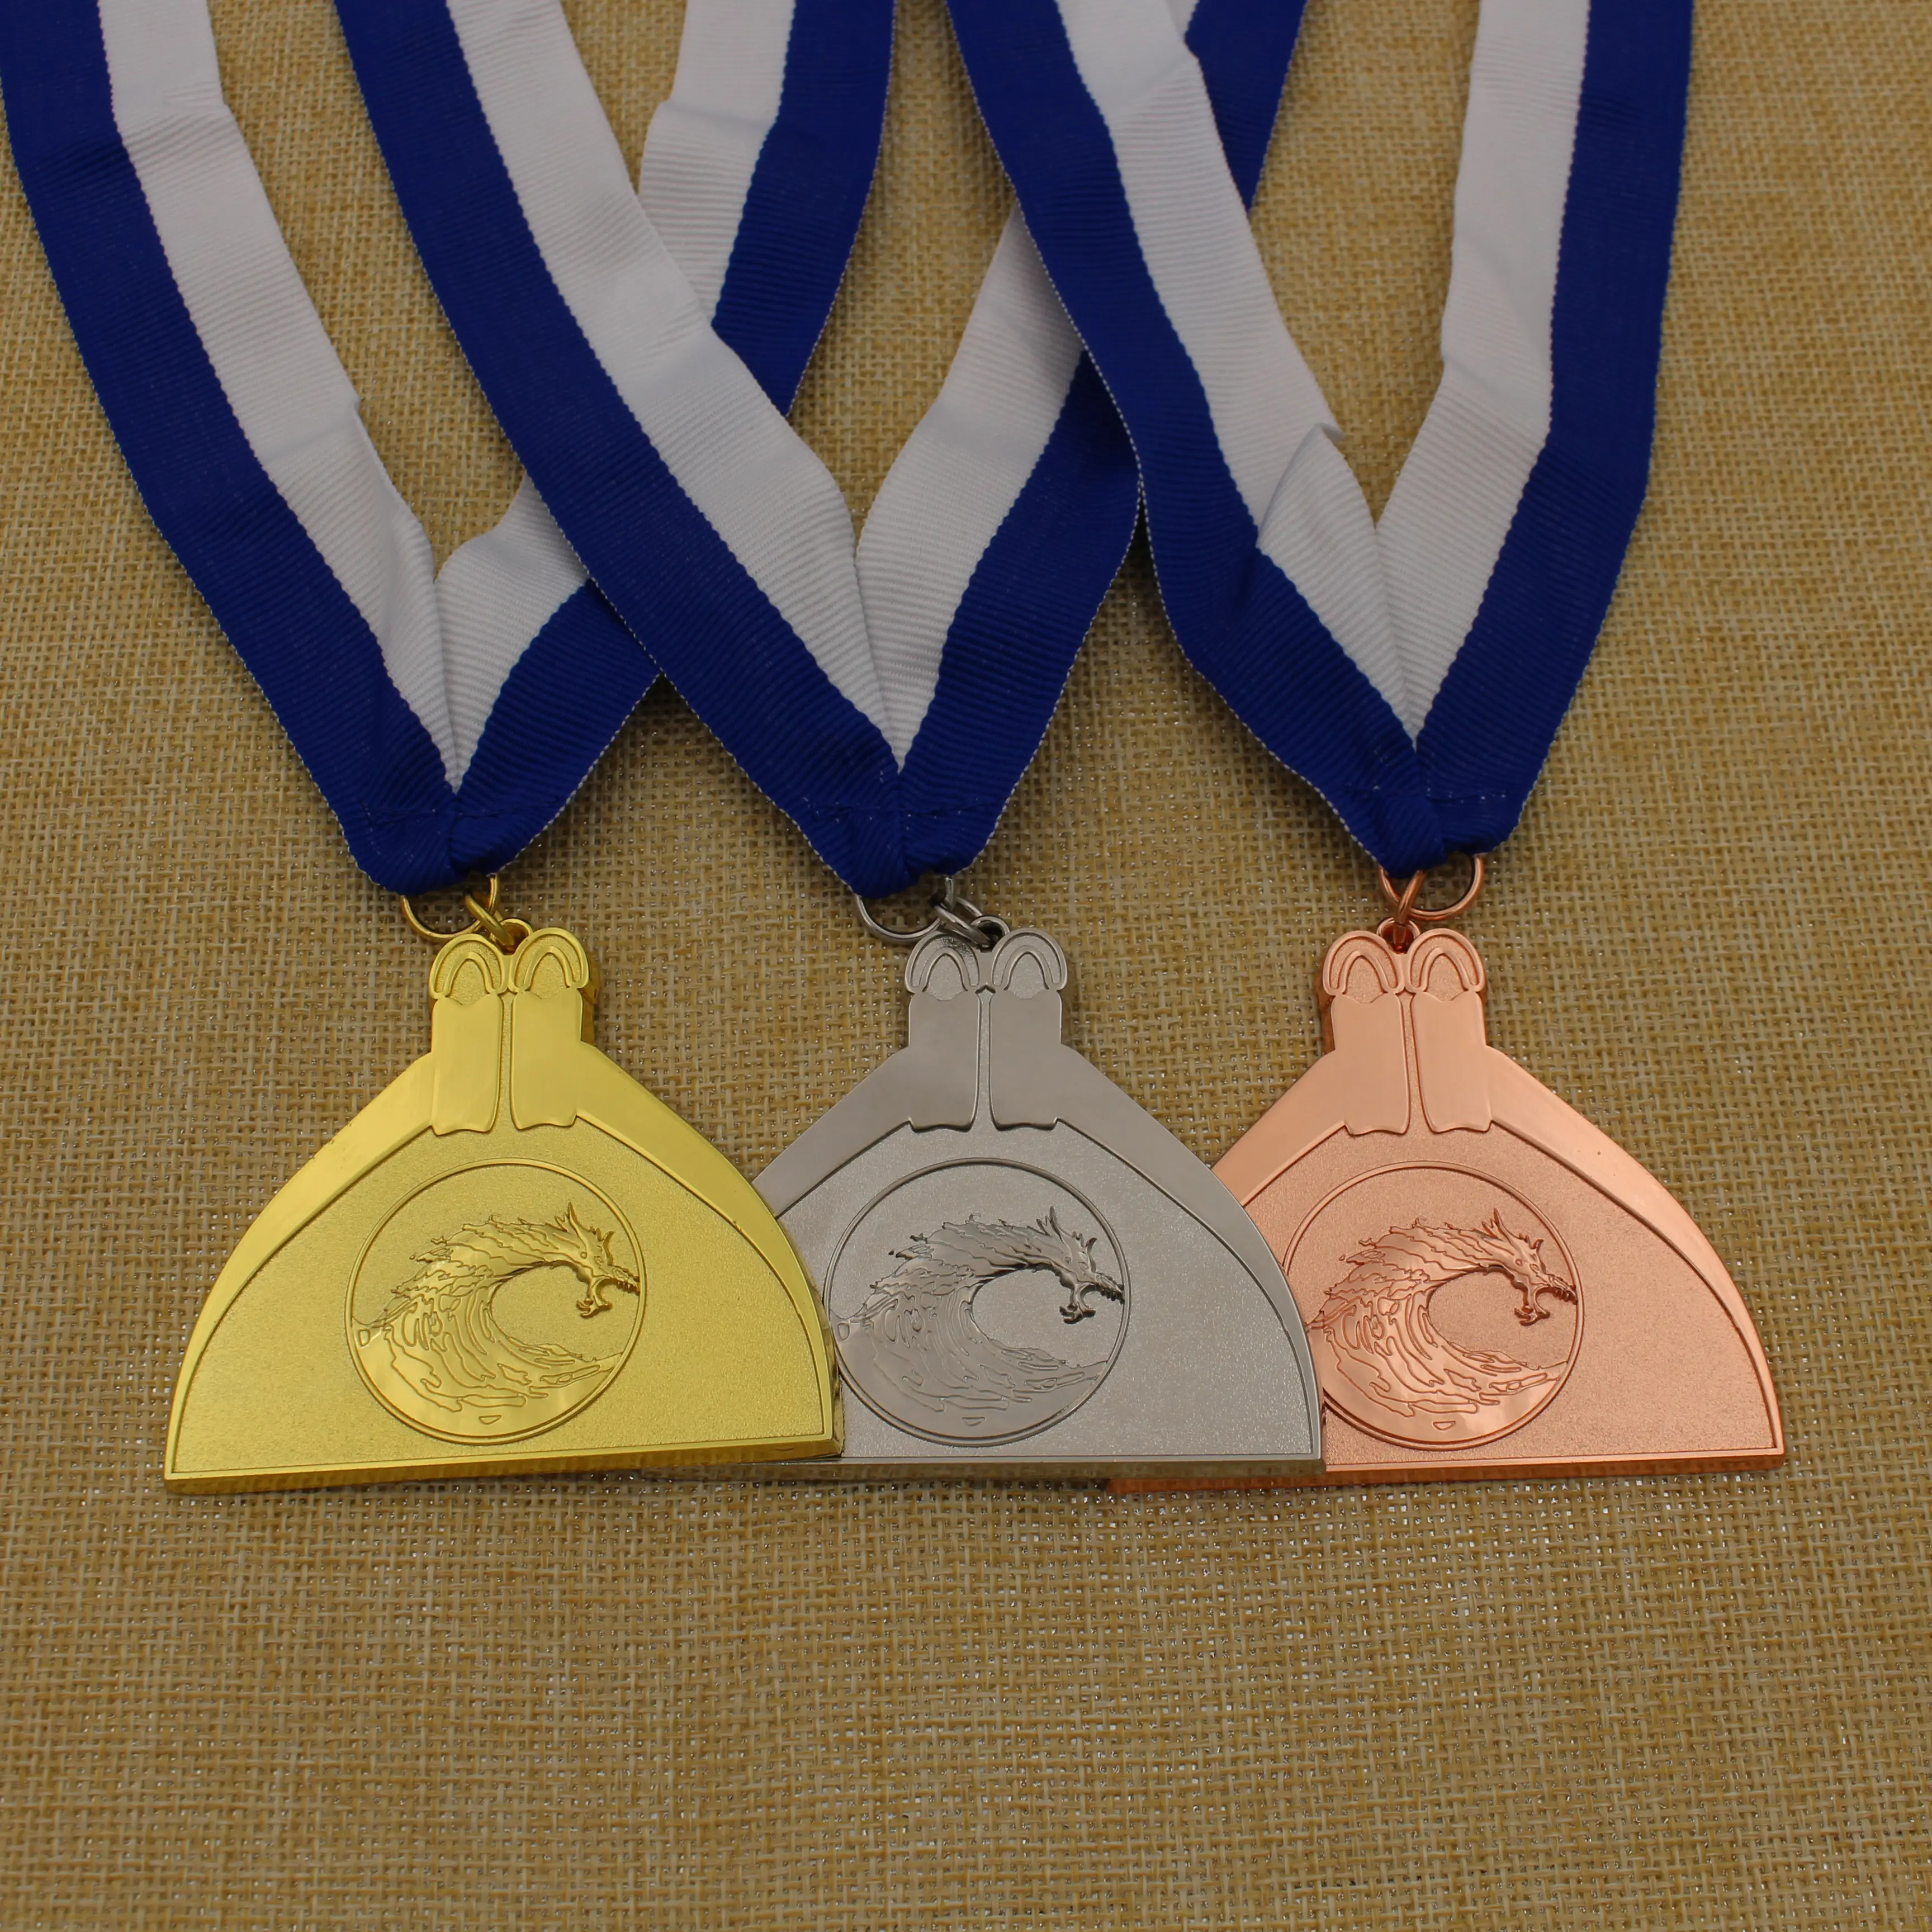 कस्टम डिज़ाइन मेटल ड्रैगन बोट रेगाटा स्पोर्ट्स मेडल 2डी 3डी सोना चांदी कांस्य पदक